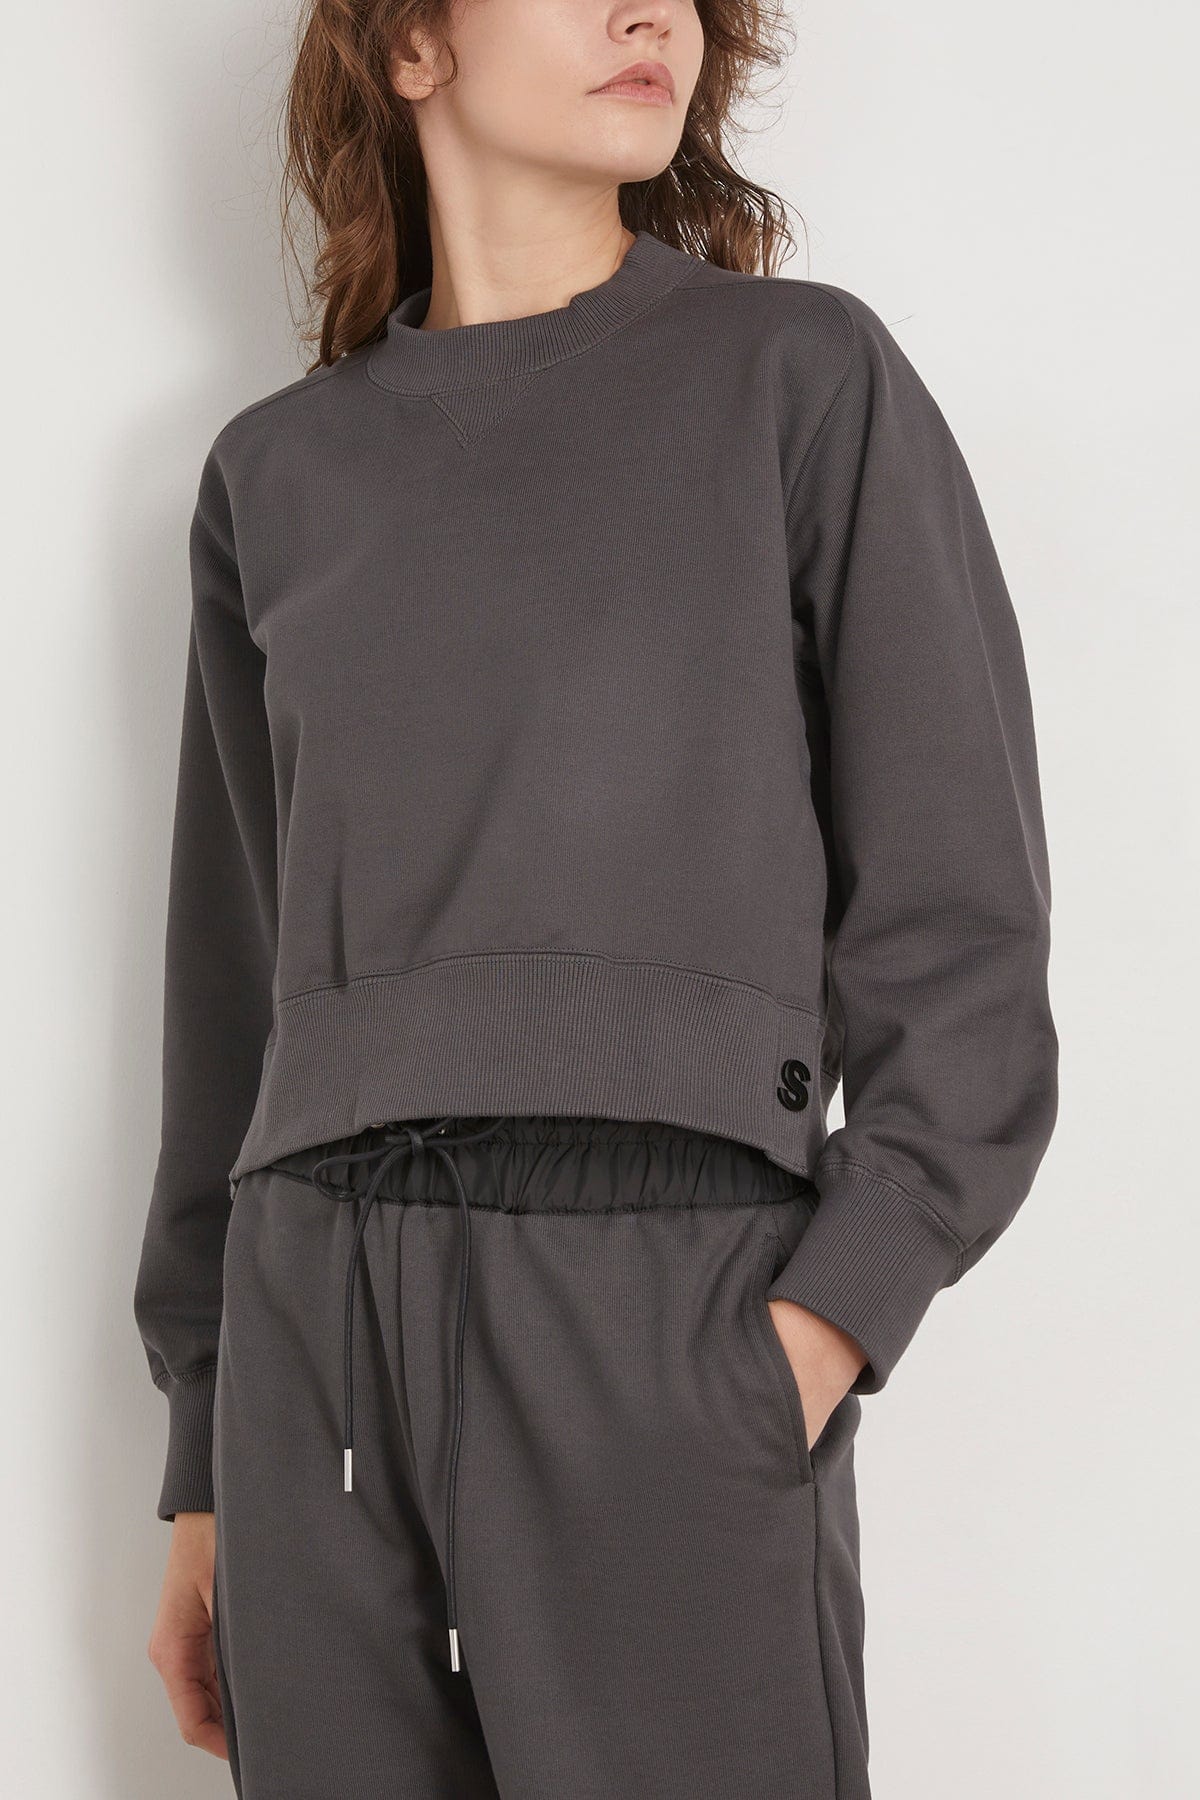 Sacai Sweatshirts Sweat Jersey Pullover in Charcoal Gray Sacai Sweat Jersey Pullover in Charcoal Gray